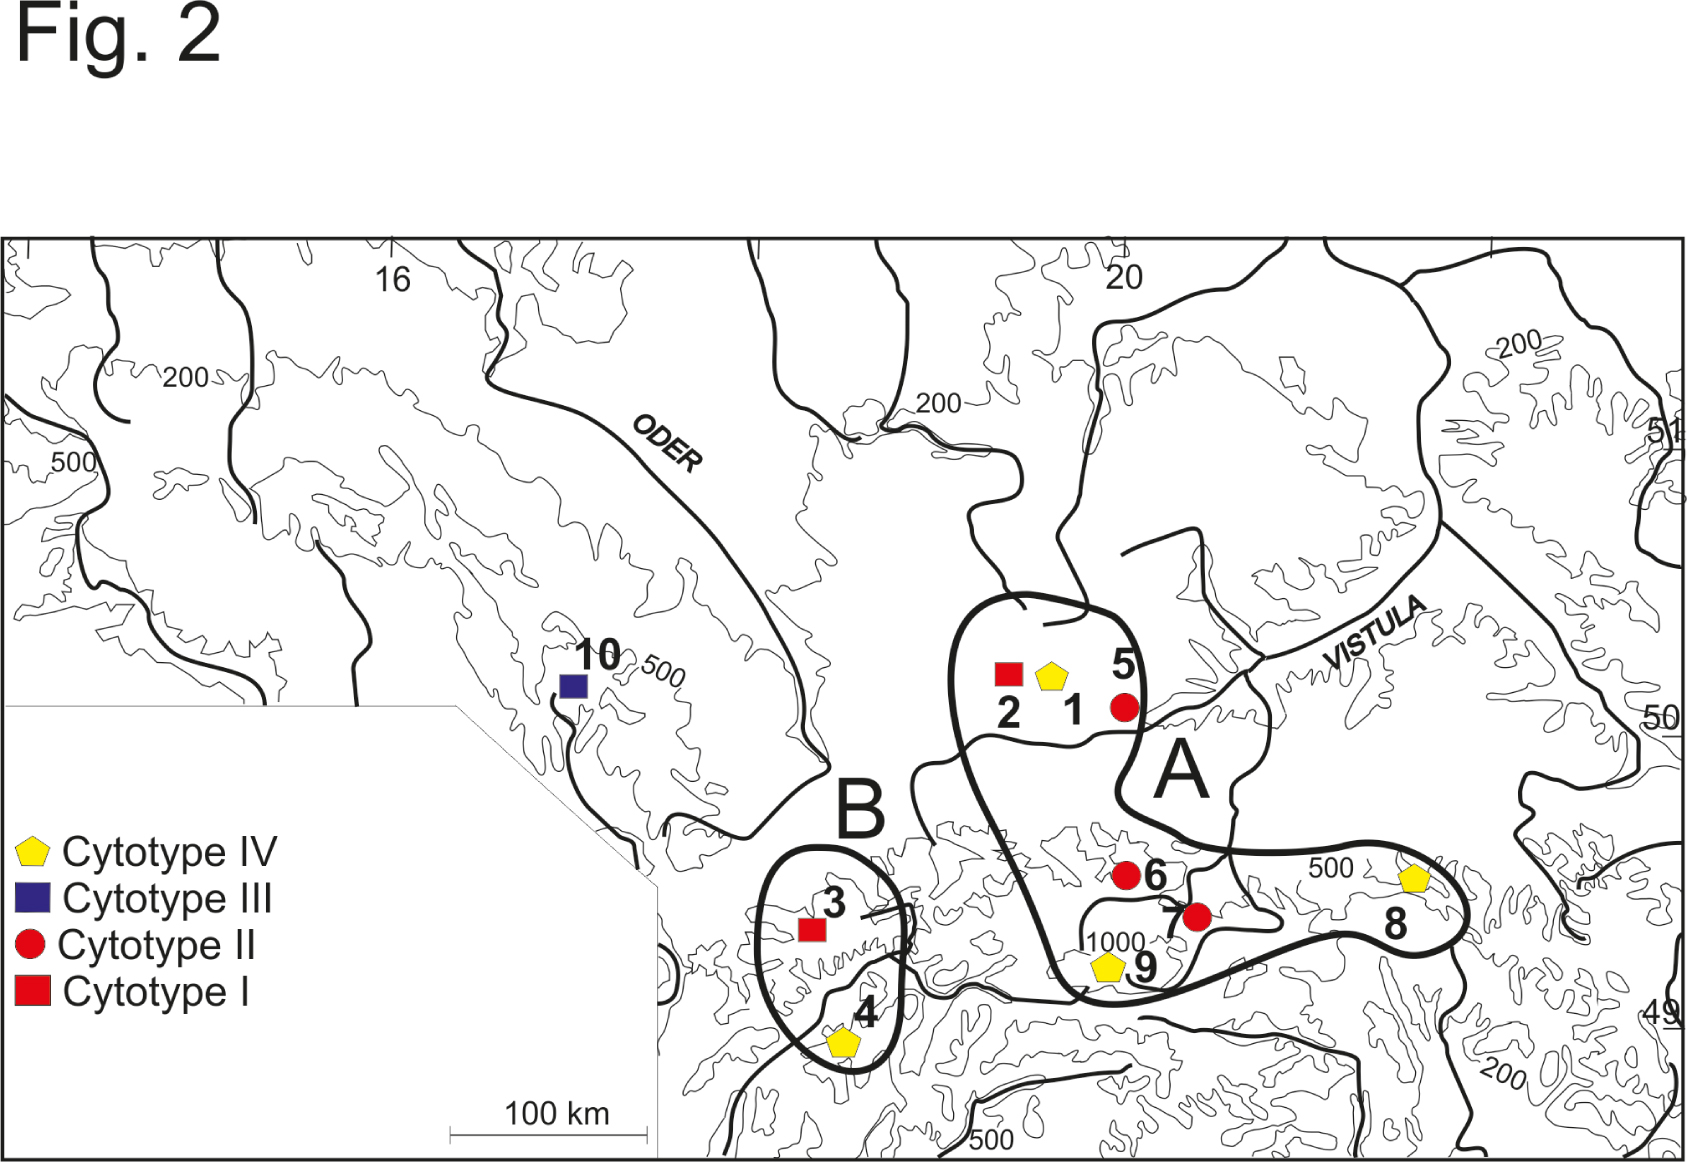 Fig. 2. Distribution of the four C-Giemsa heterochromatine Cytotypes I-IV and the two groups (A and B) based on ISSR analysis and UPGMA classification of Aconitum variegatum sampled in the Western Carpathians, Sudetes Mts. and Polish Uplands (Ilnicki et al. 2011): 1 – Dąbrowa Górnicza, Silesian Upland; 2 – Bytom-Blachówka, Silesian Upland; 3 – Podolanky, Moravskoslezské Beskid Mts., W. Carpathians; 4 – Súlov, Stražovské vrchy Mts., W. Carpathians; 5 – Ojców, Małopolska Upland; 6 – Rzeki, Gorce Mts., W. Carpathians; 7 – Mt. Wysoka, Pieniny Mts., W. Carpathians; 8 – Mt. Kornuty, Beskid Niski Mts., W. Carpathians; 9 – Dolina Kościeliska Valley, Tatra Mts., W. Carpathians; 10 – Velký Kotel, Hruby Jeseník Mts., E. Sudetes.